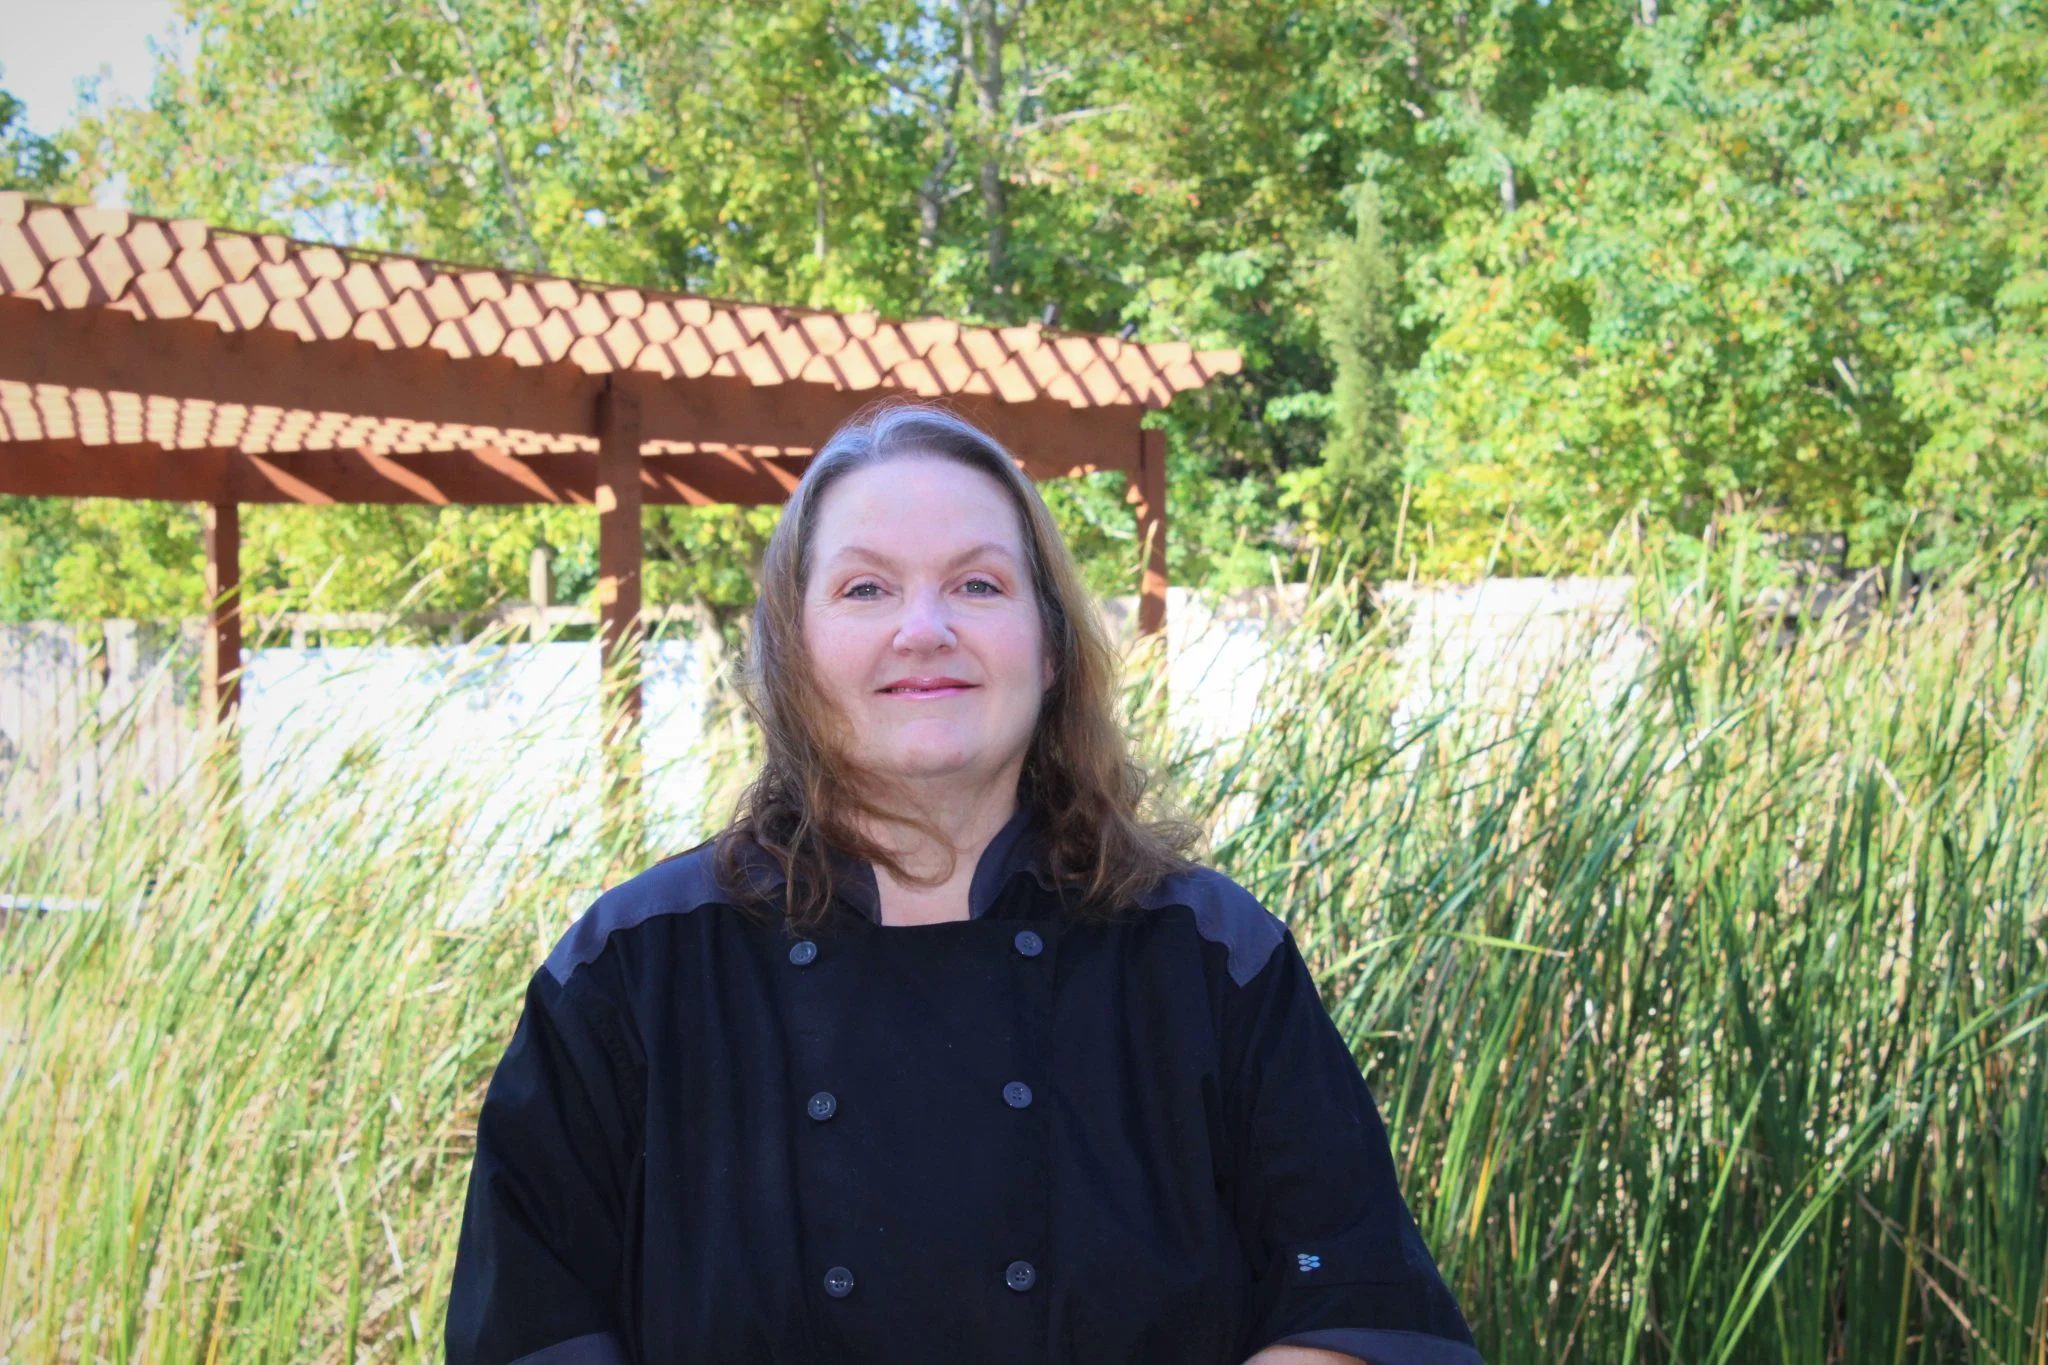 Darlene, head chef at Silver Sycamore